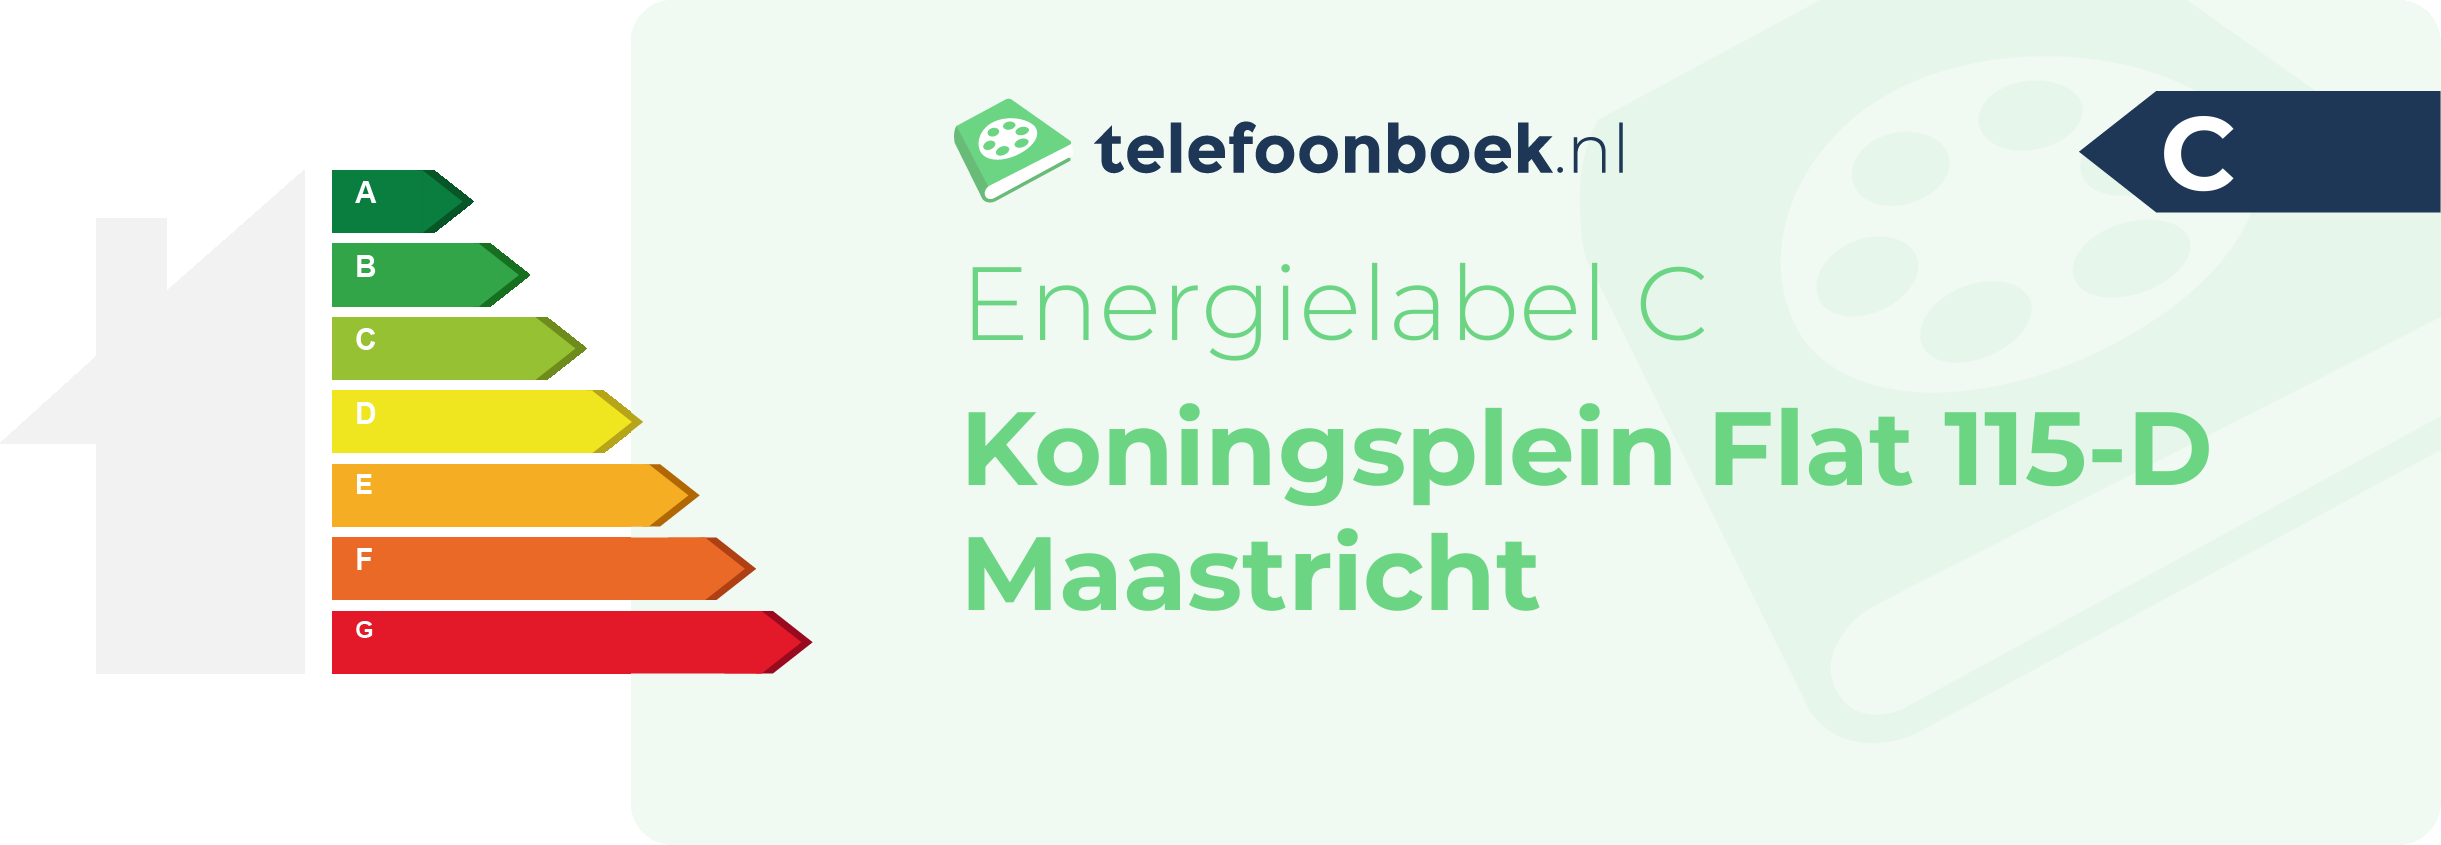 Energielabel Koningsplein Flat 115-D Maastricht